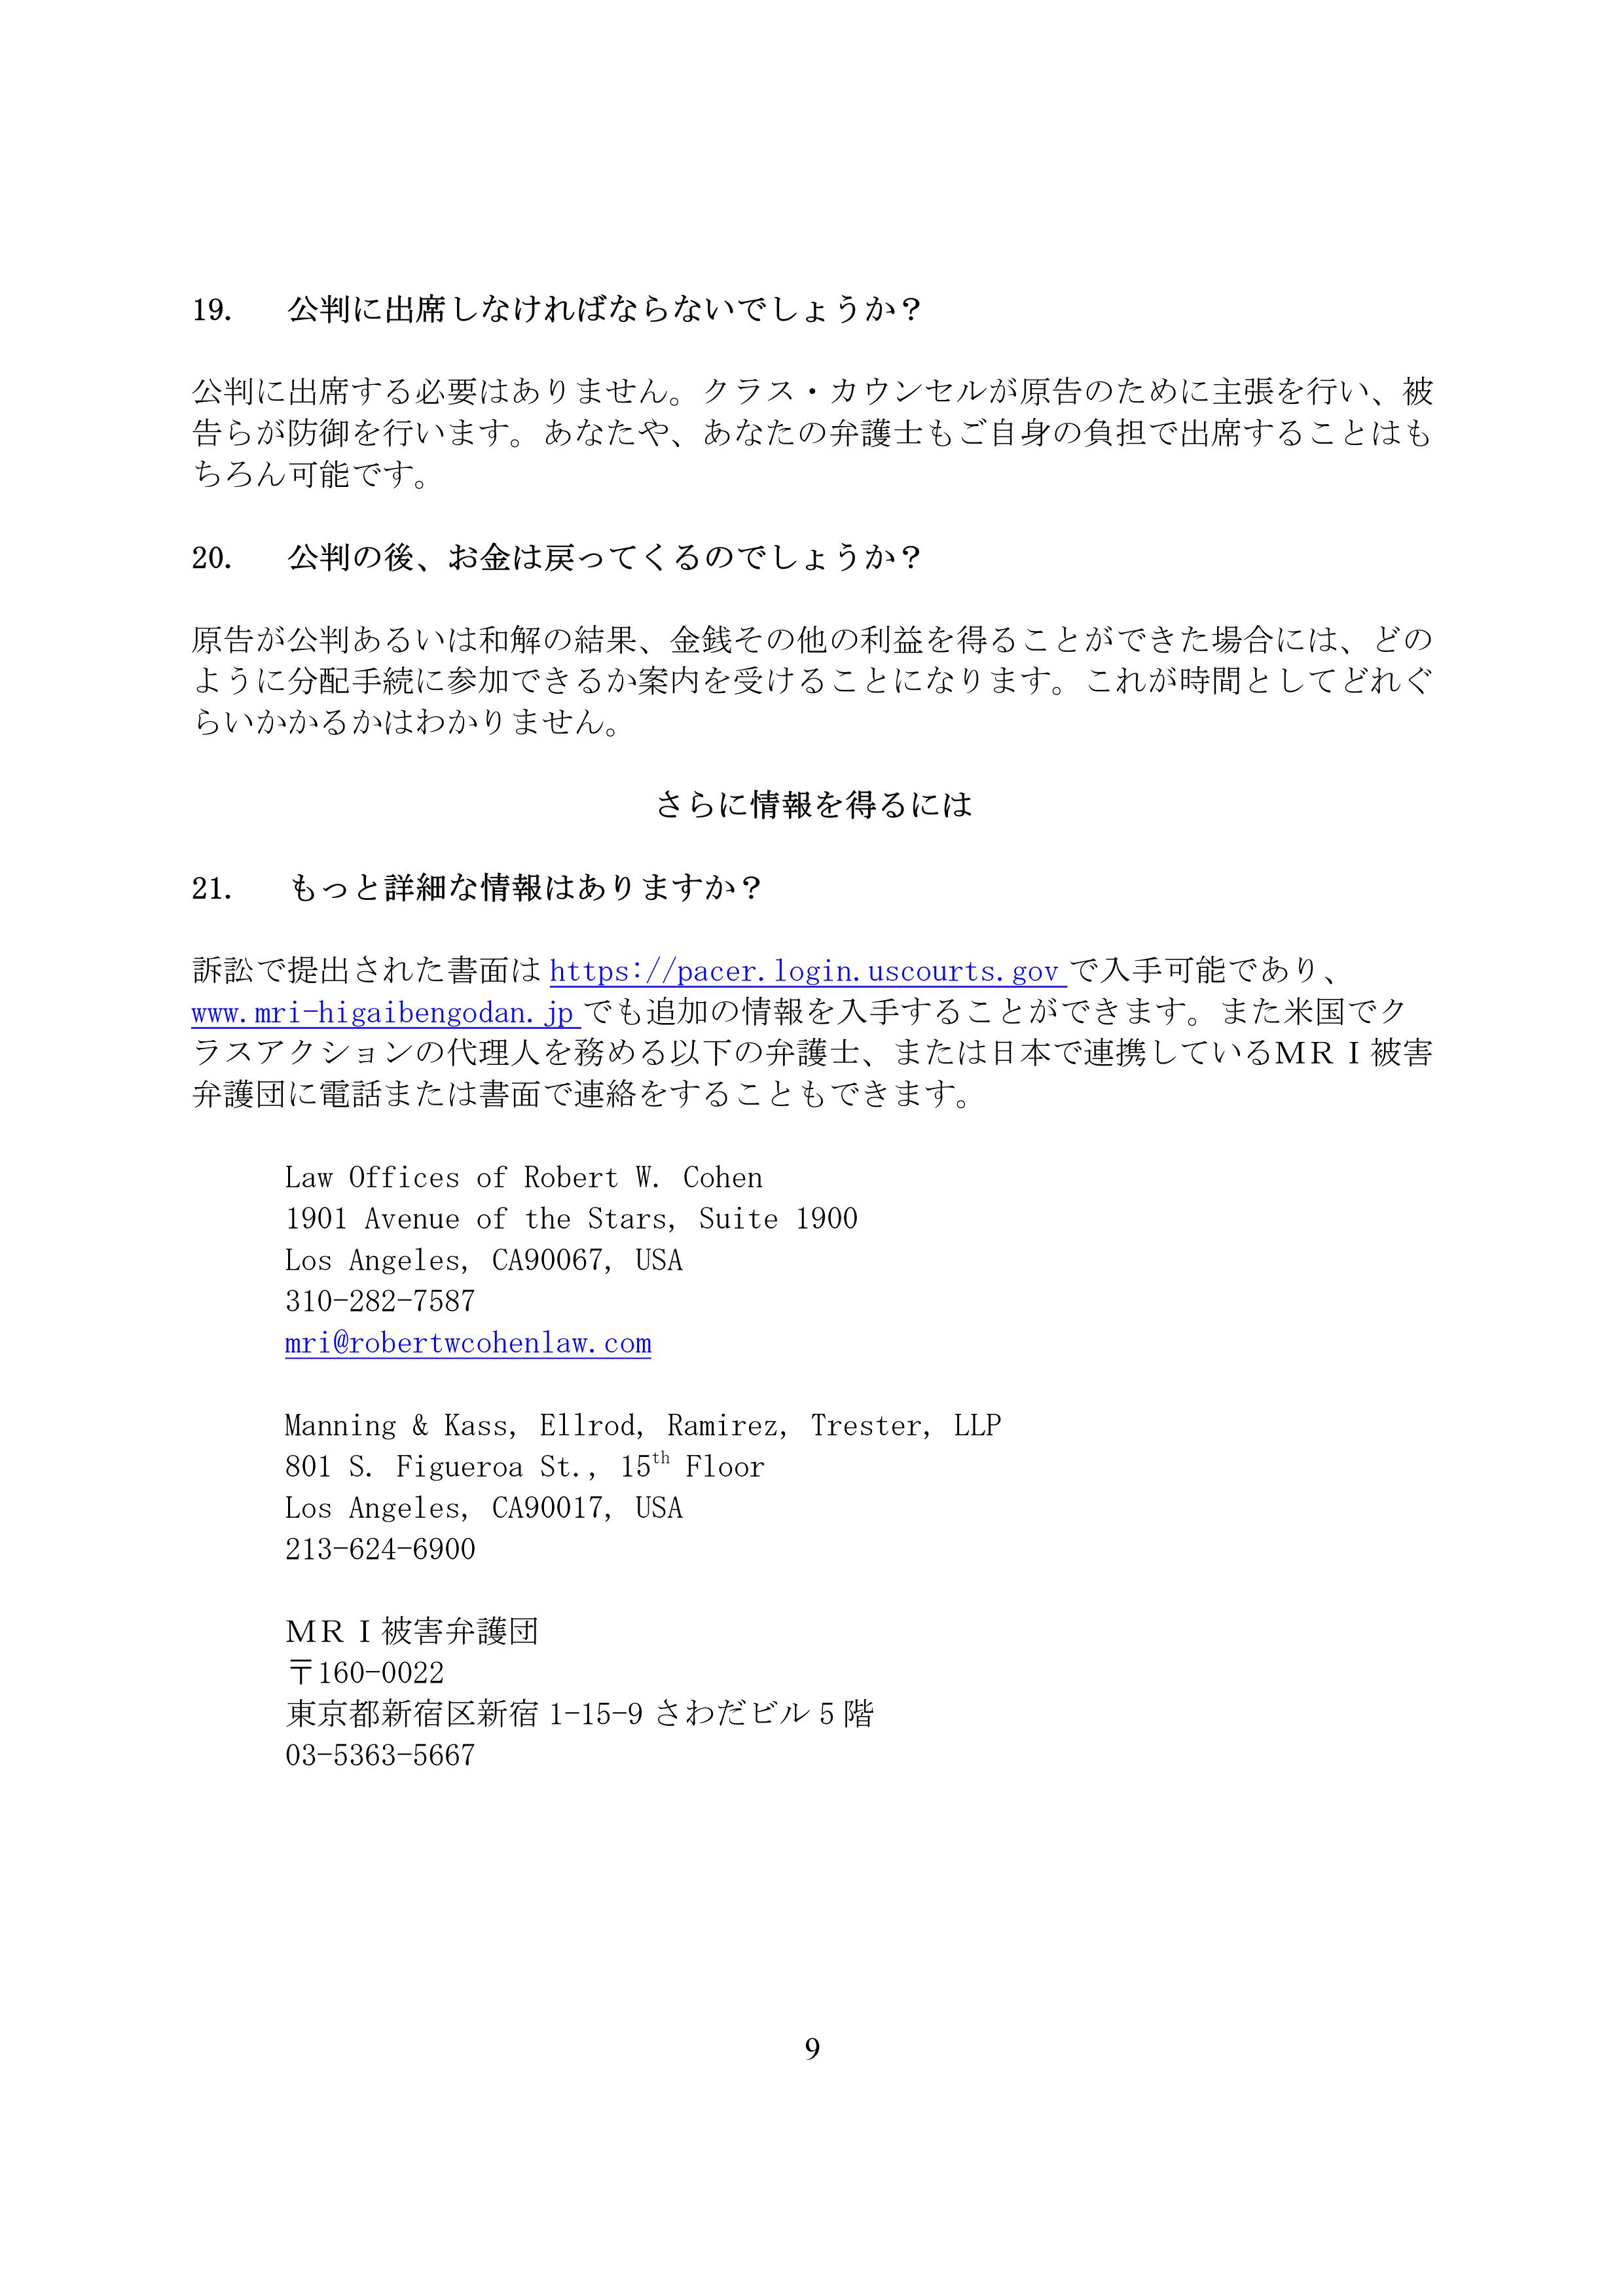 MRI Class Cert Notice_Japanese translation_09